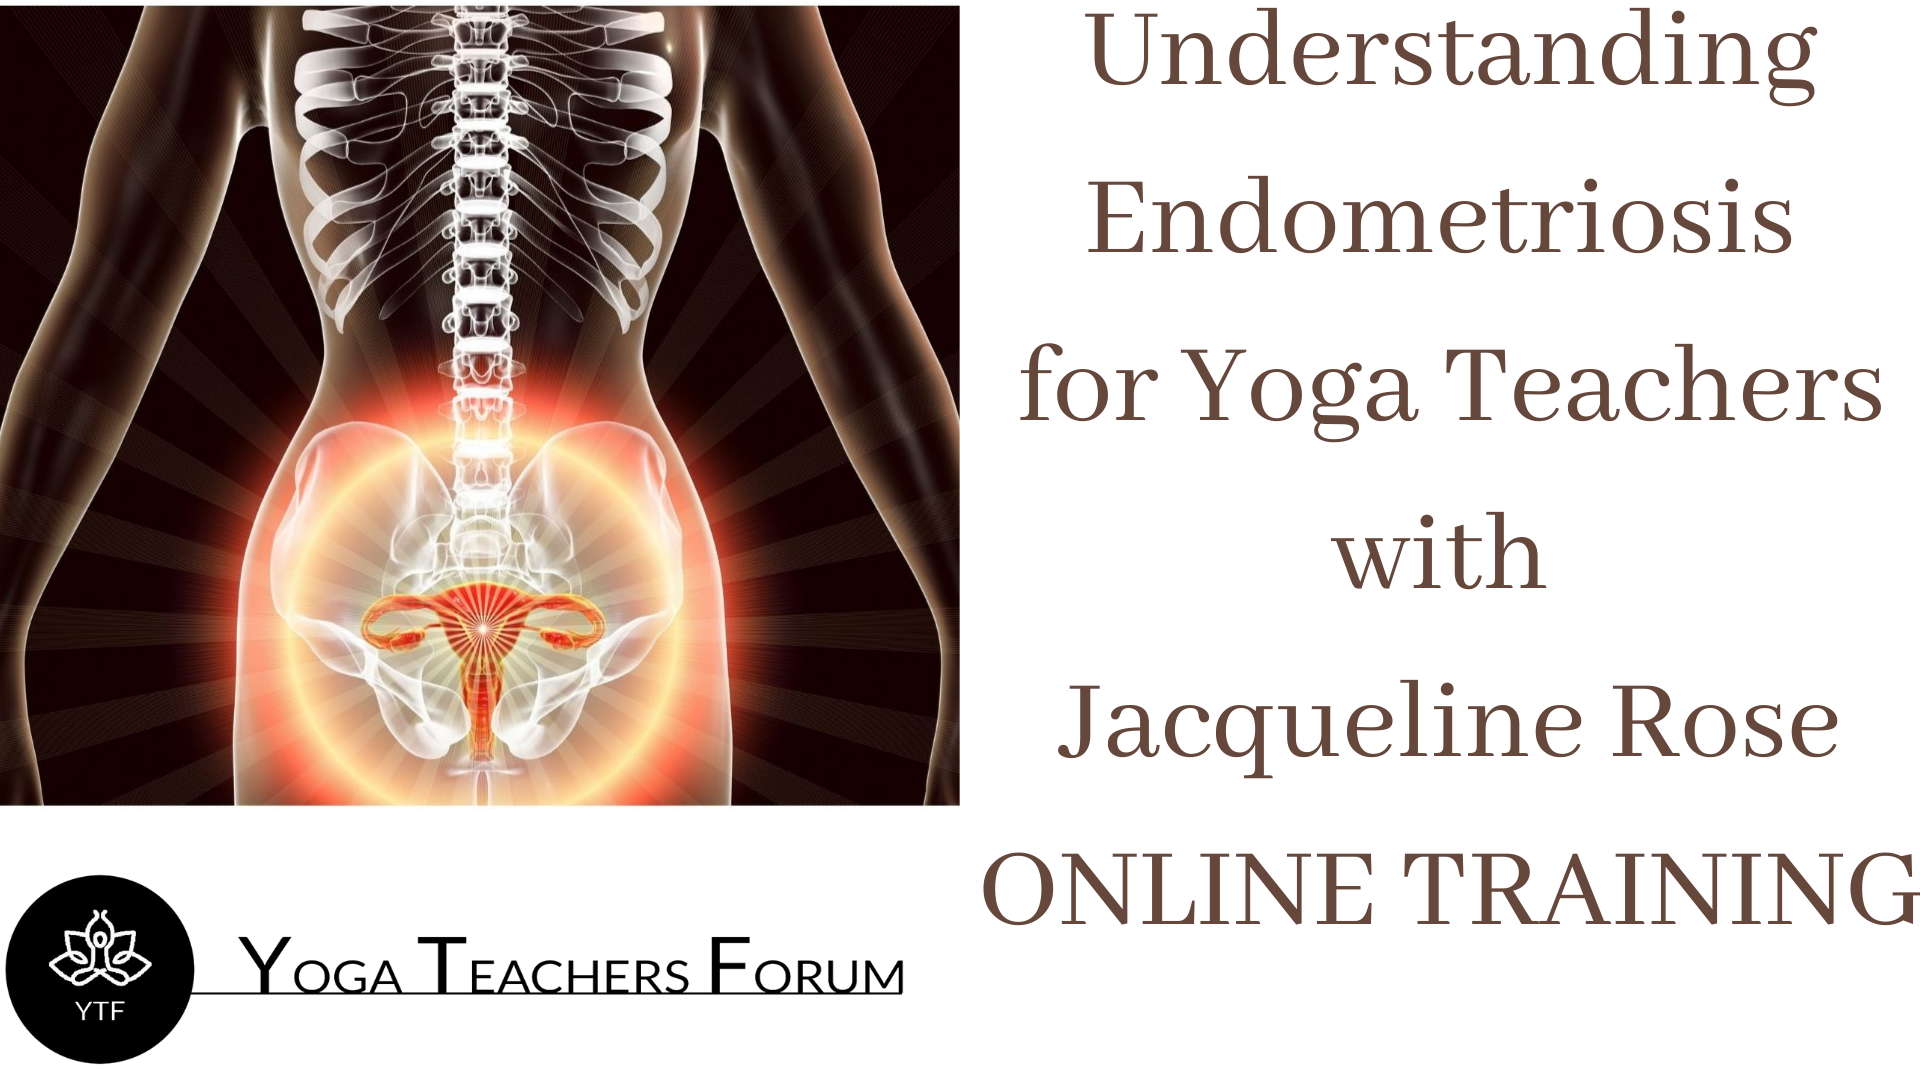 Understanding Endometriosis for Yoga Teachers with Jacqueline Rose ONLINE TRAINING